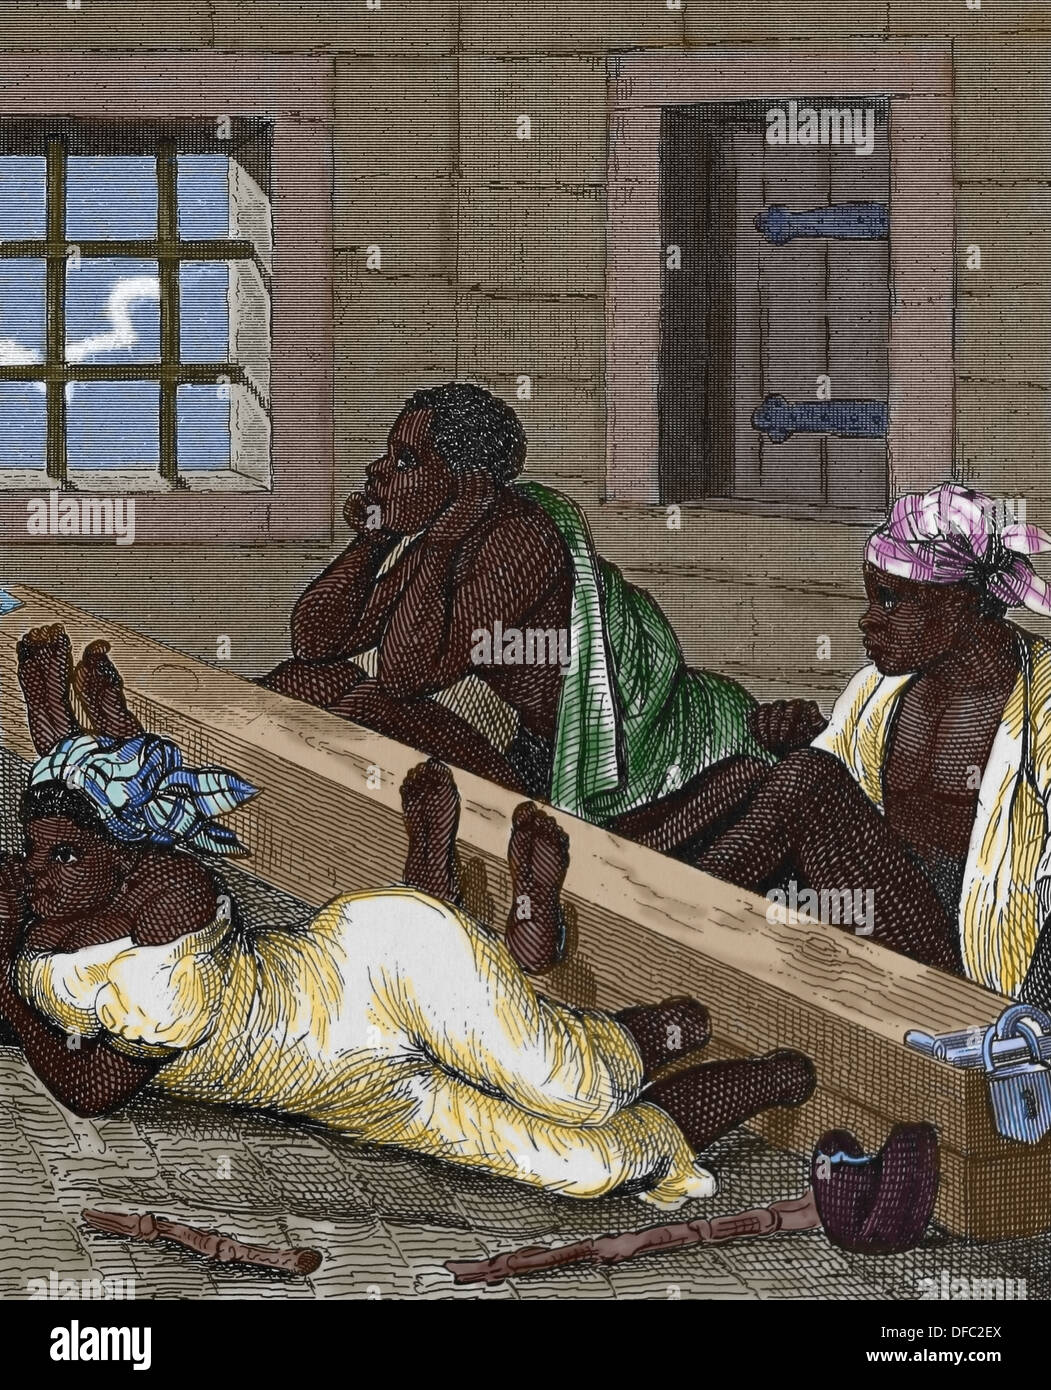 Brasilianische Sklavenhandel Schwarze Sklaven In Aktien In Brasilien Farbige Gravur Stockfotografie Alamy